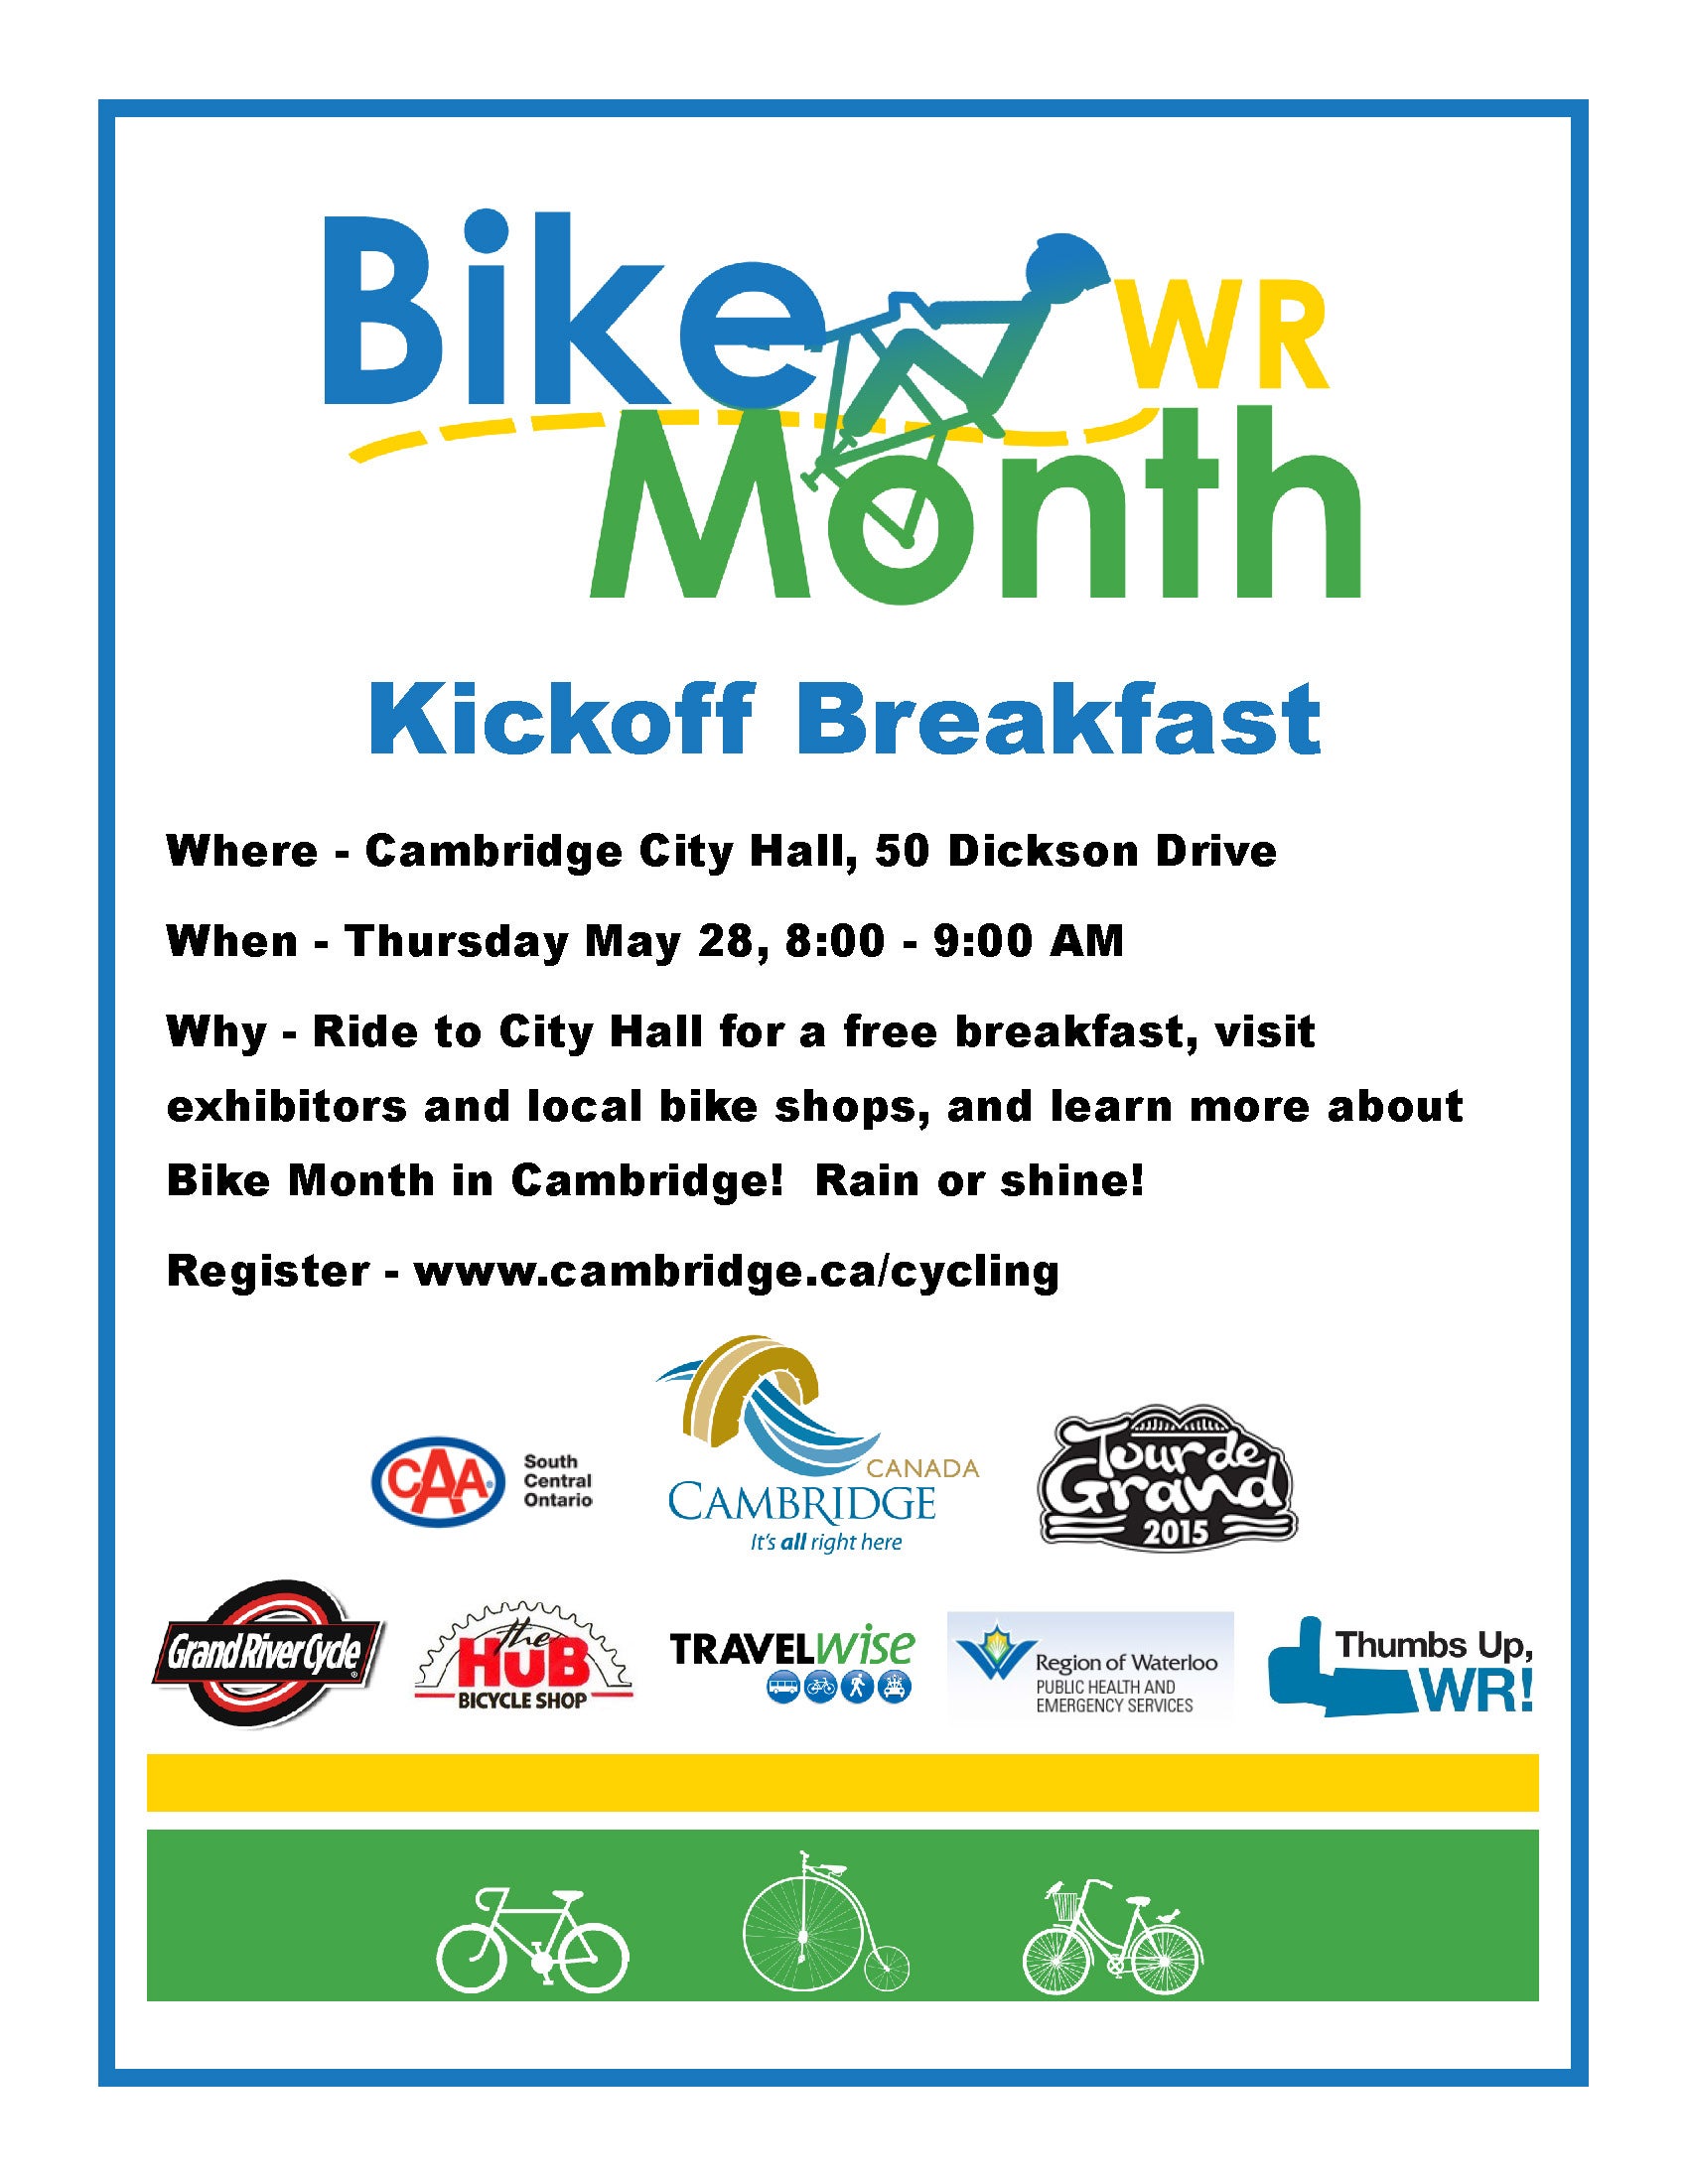 Bike Month Cambridge Kickoff Poster